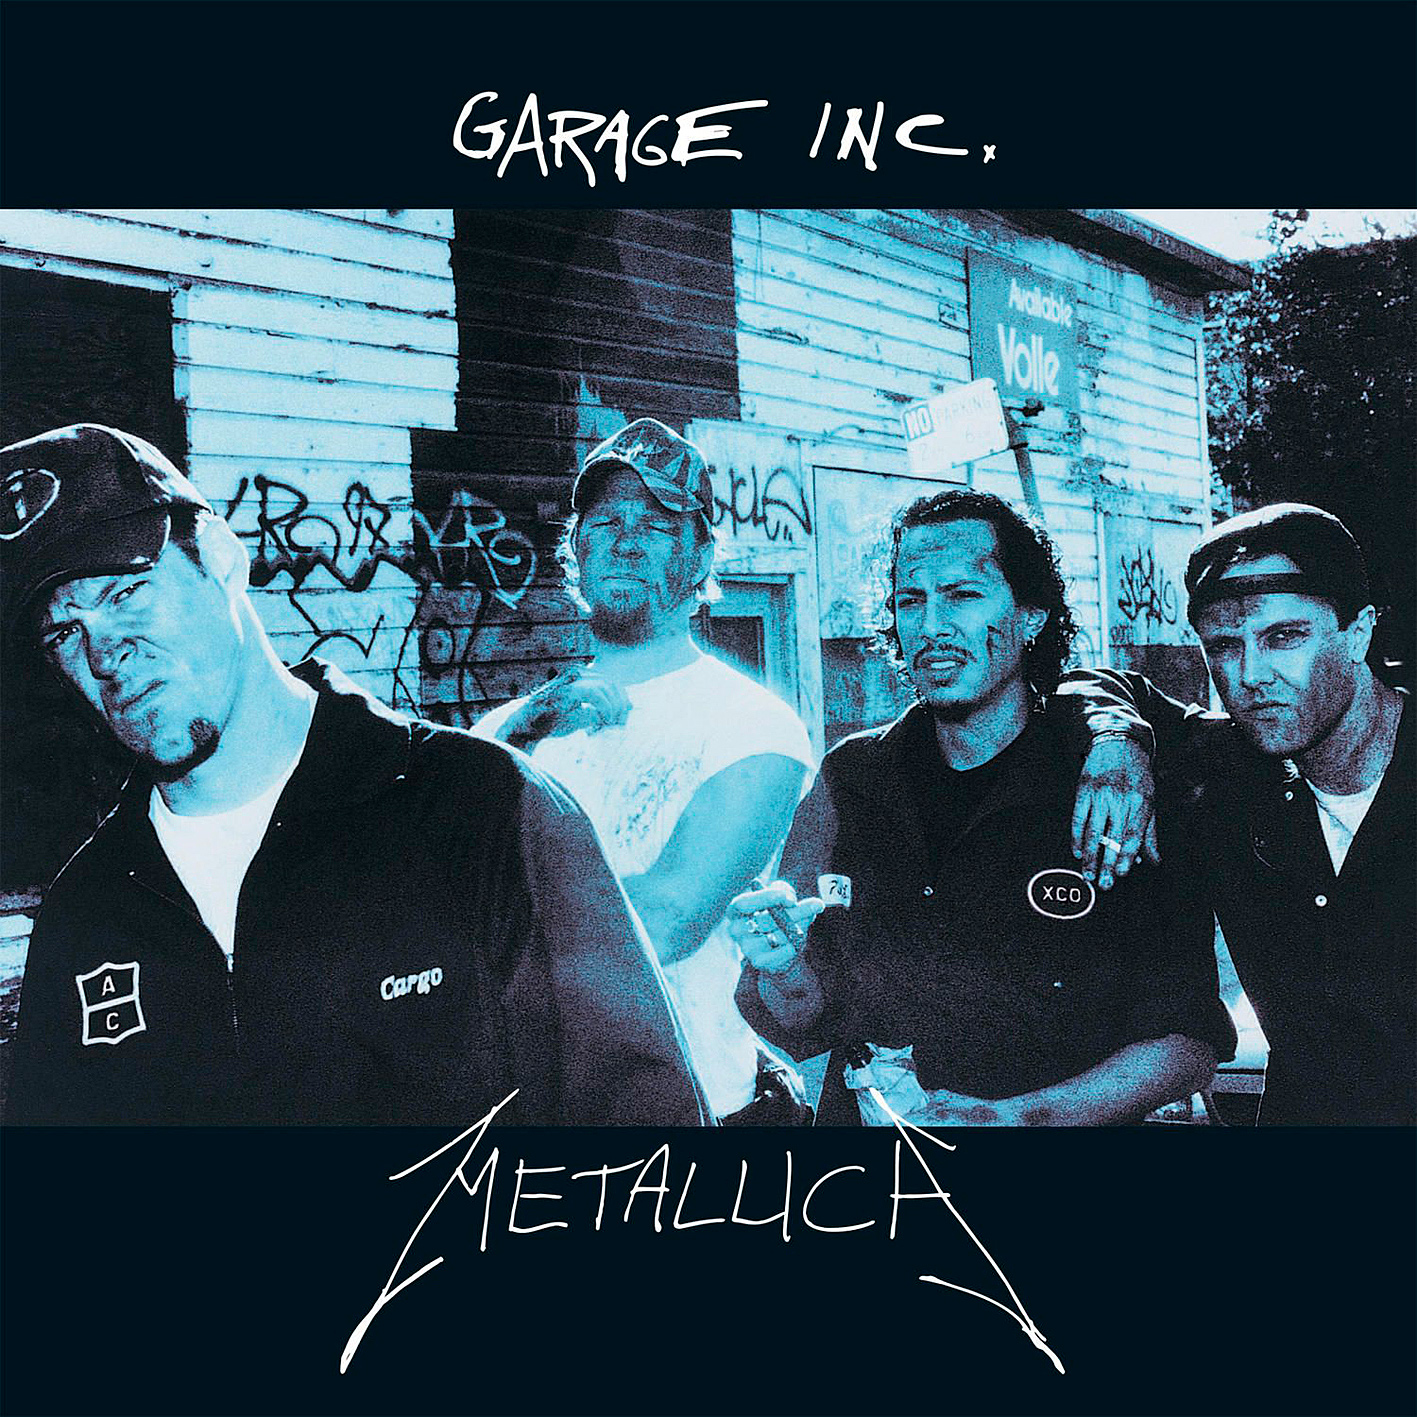 Metallica - Garage Inc. (1998/2016) [FLAC 24bit/96kHz]